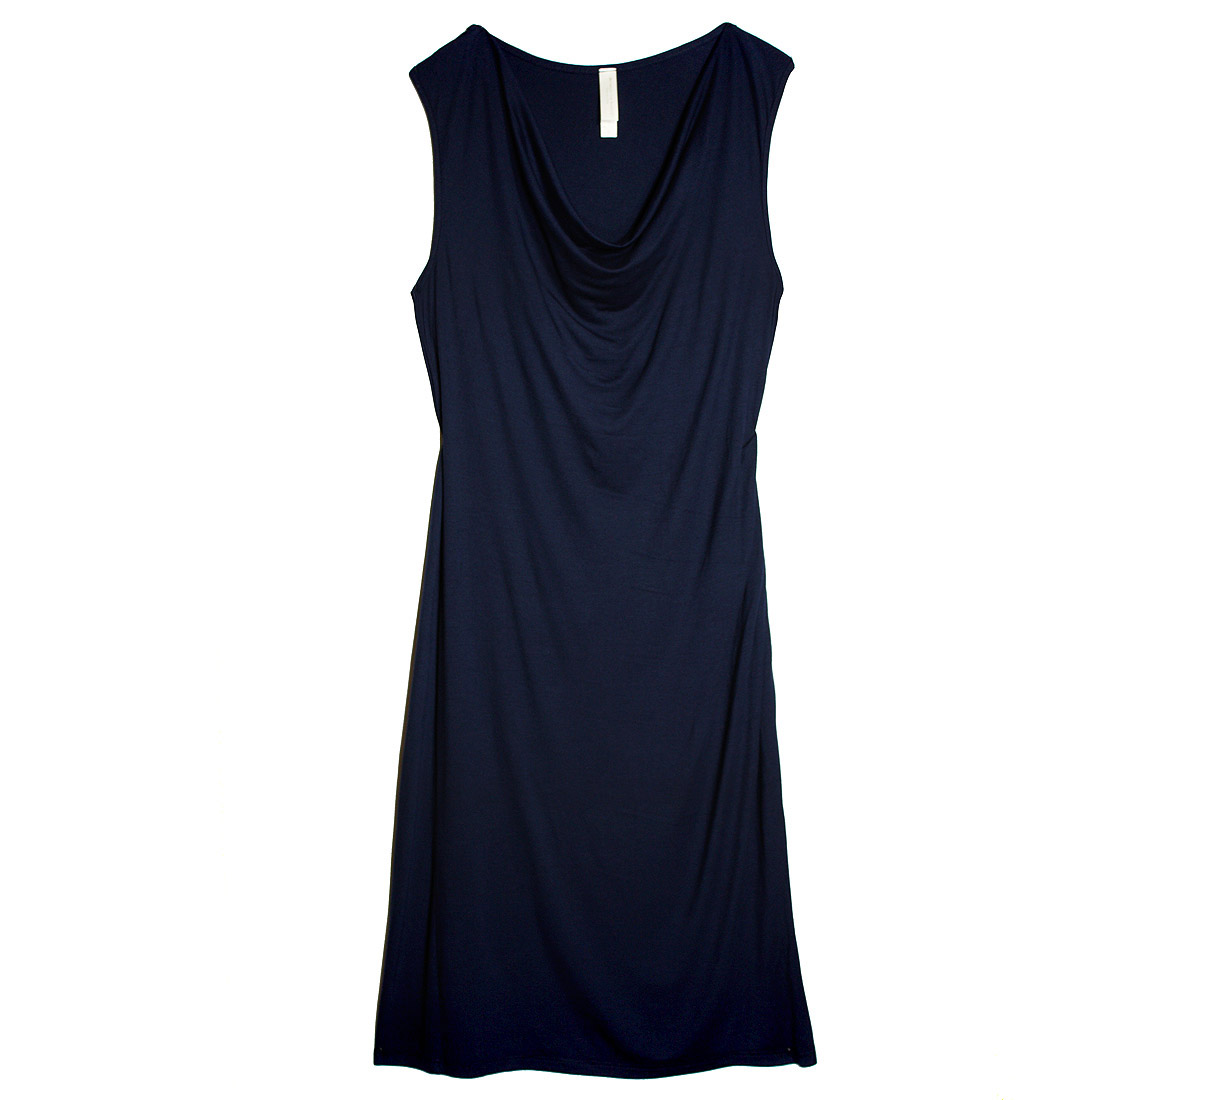 Matchplay Nightgown | Luxury Knit Nightwear | Between the Sheets Sleepwear